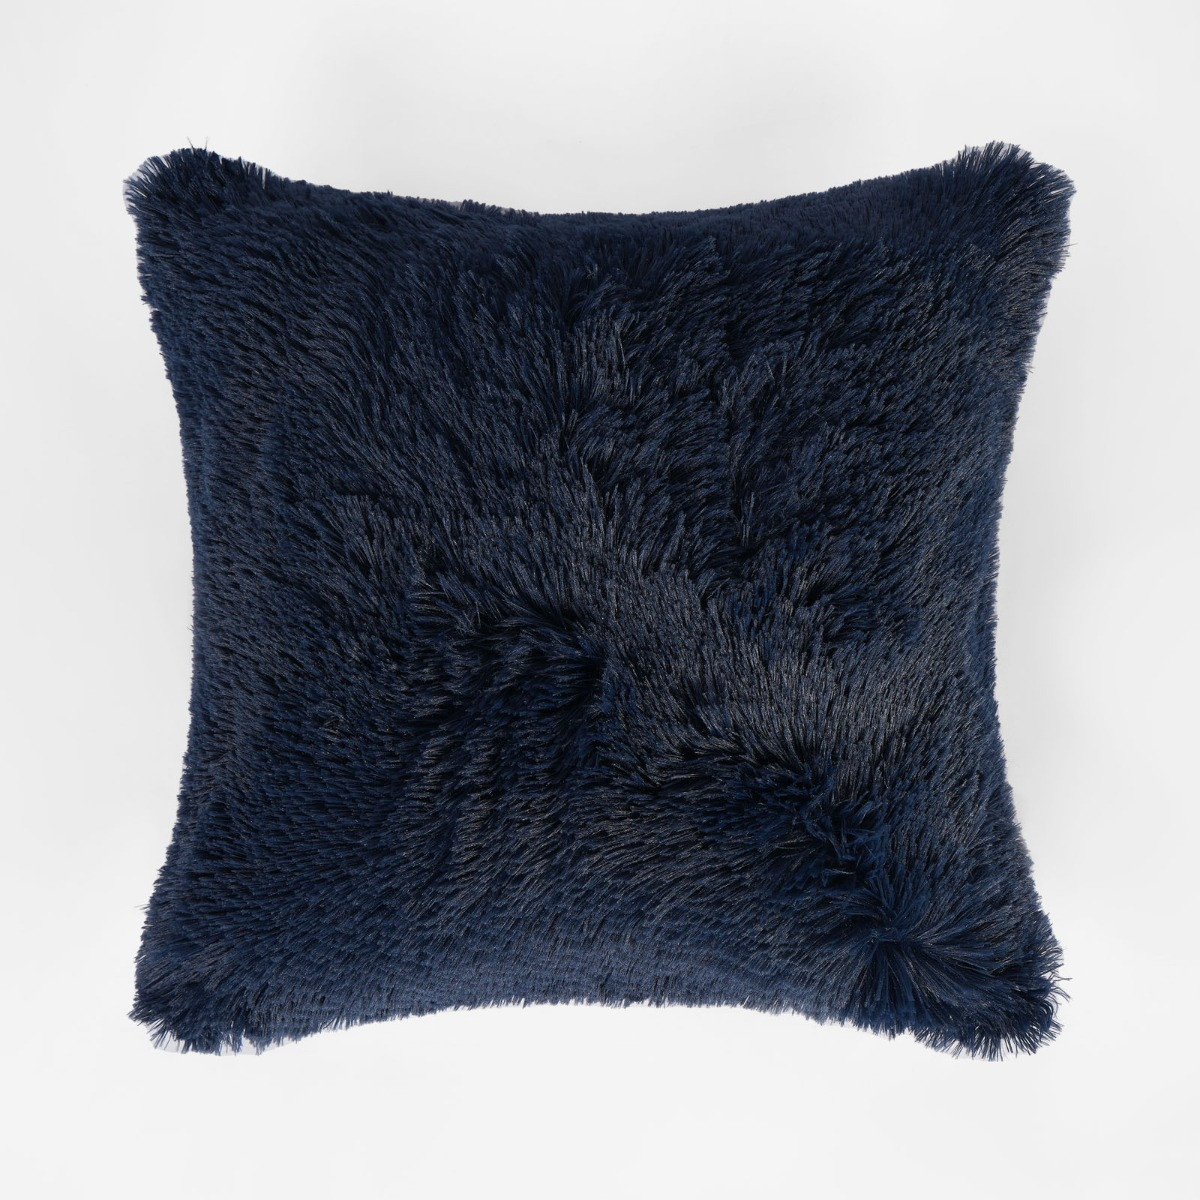 Sienna Fluffy Cushion Covers - Navy